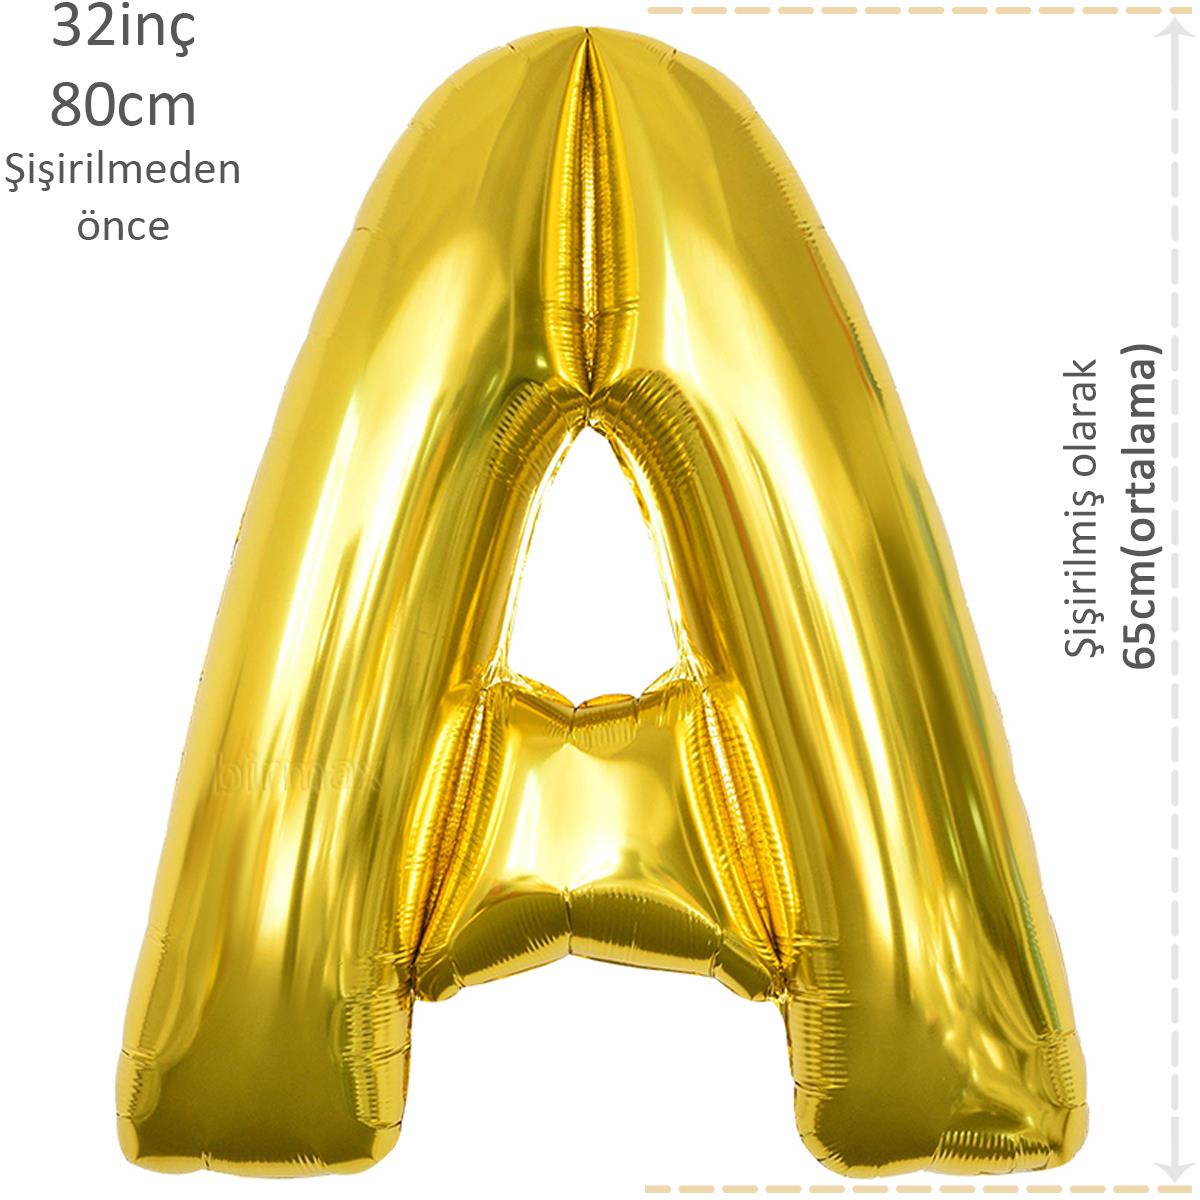 Harf Folyo Balon Altın Gold A Harfi 32inç 80cm